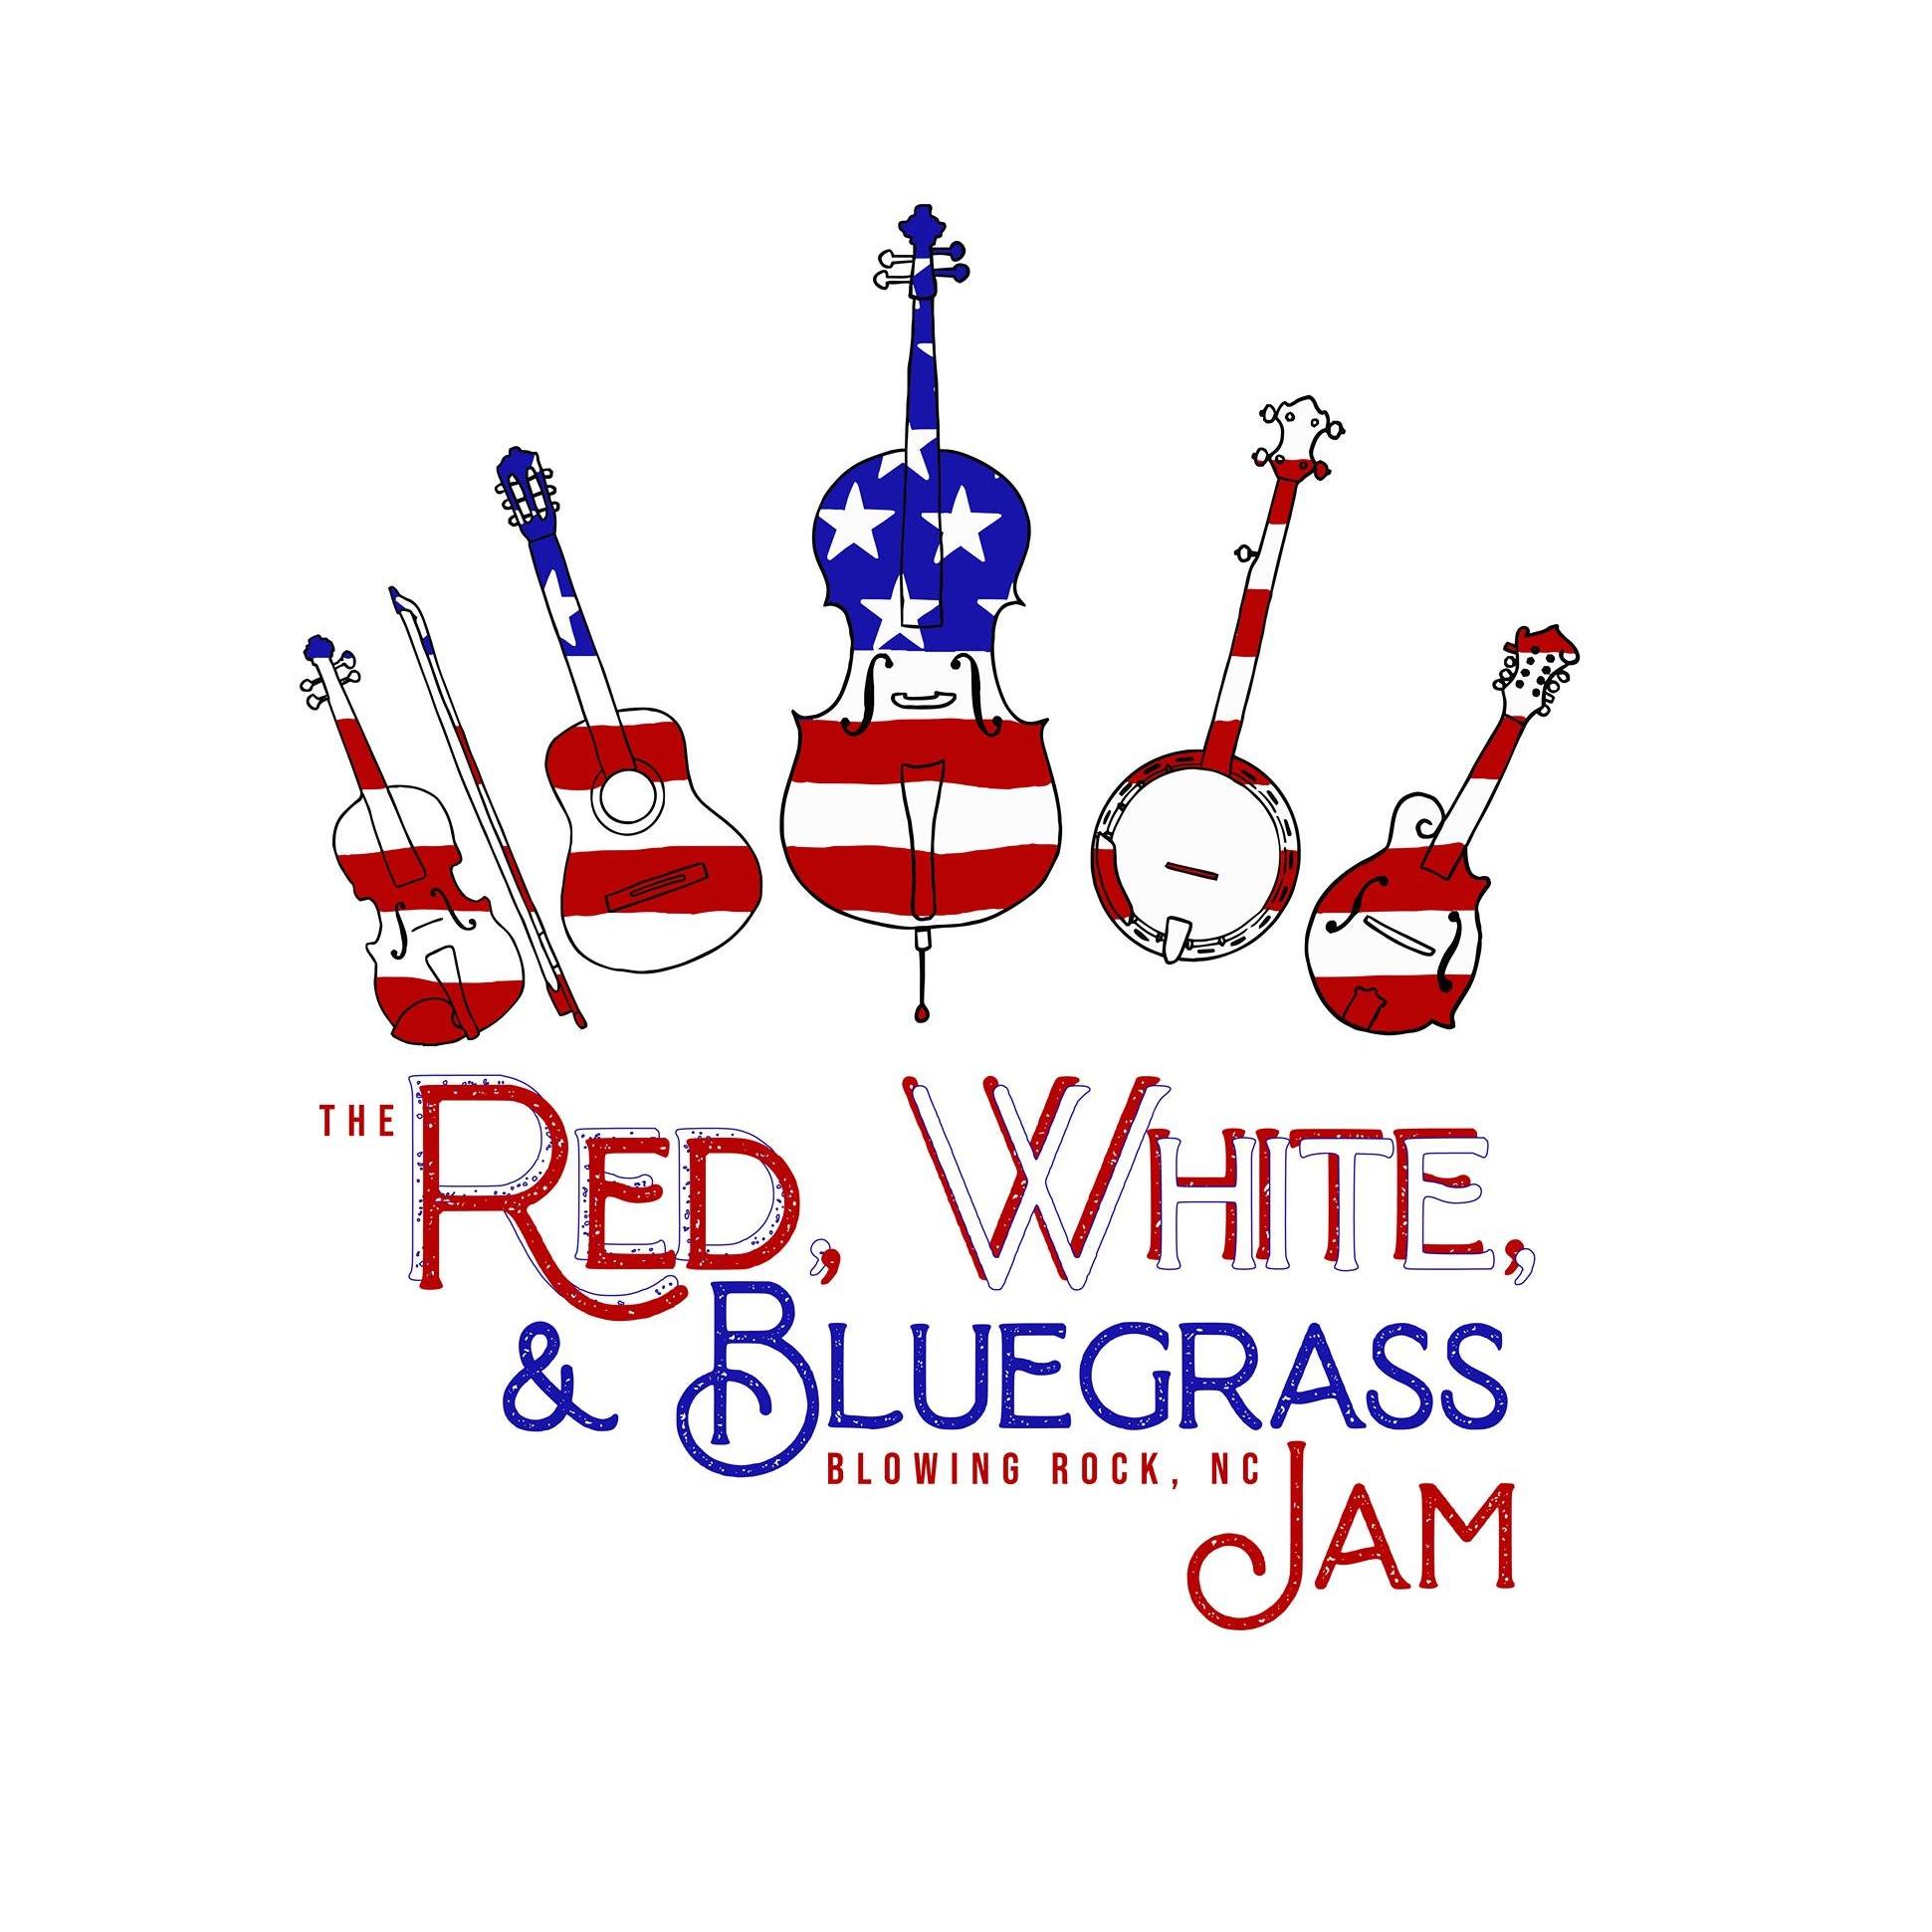 Red White Bluegrass Jam Blowing Rock NC.jpg